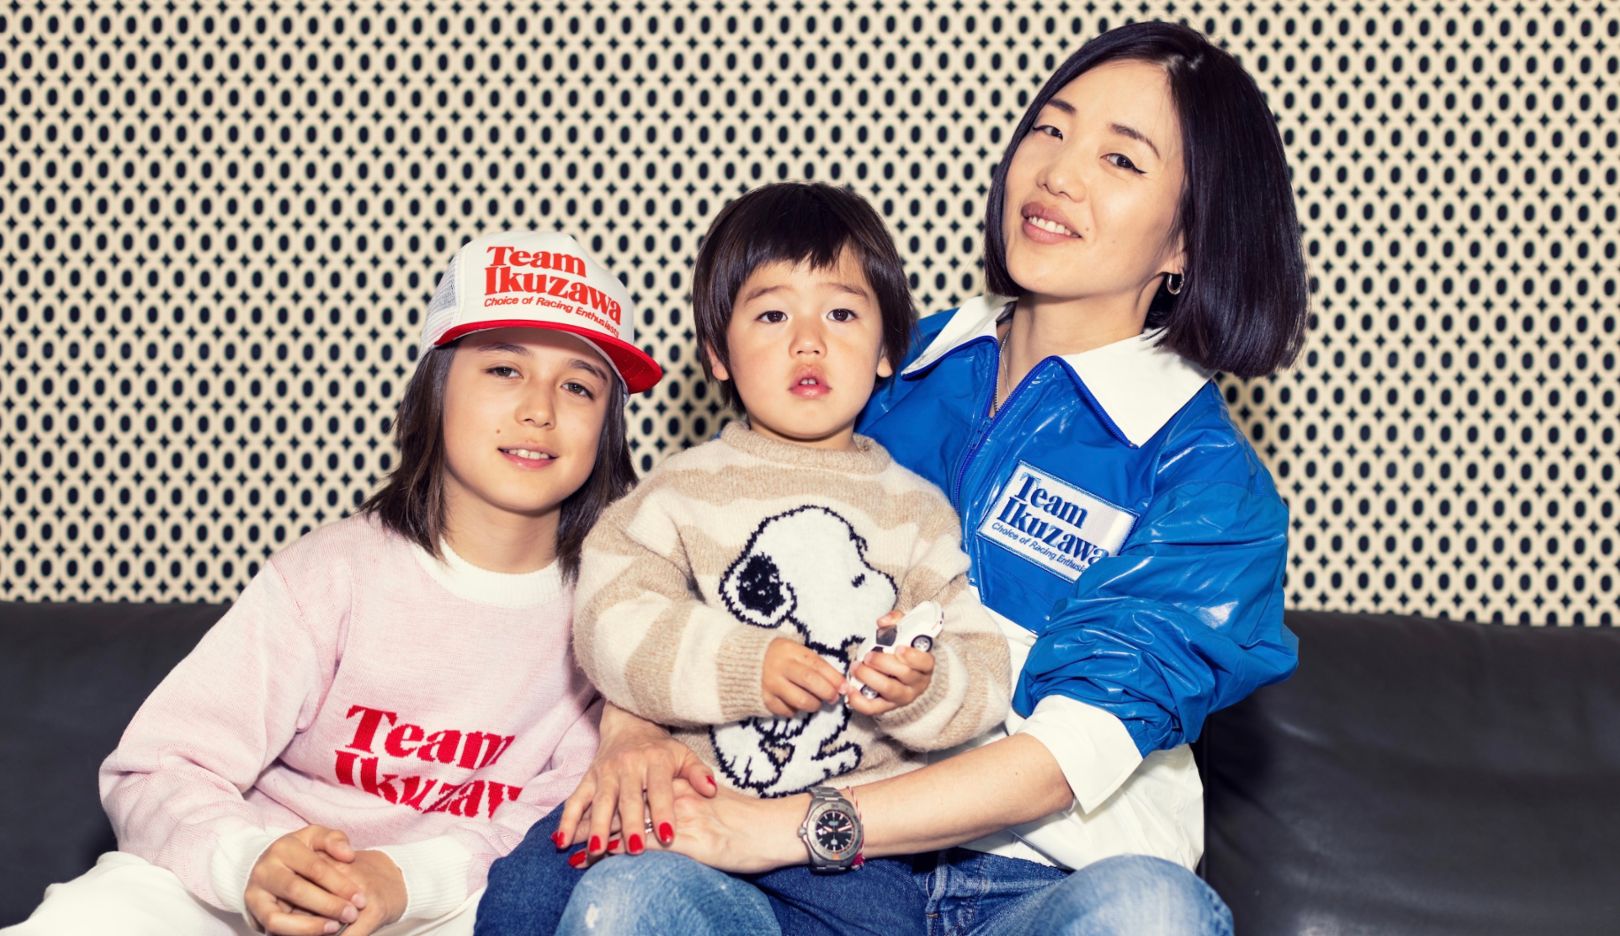 Family favorite: Mai Ikuzawa and her sons like wearing Team Ikuzawa brand clothing.